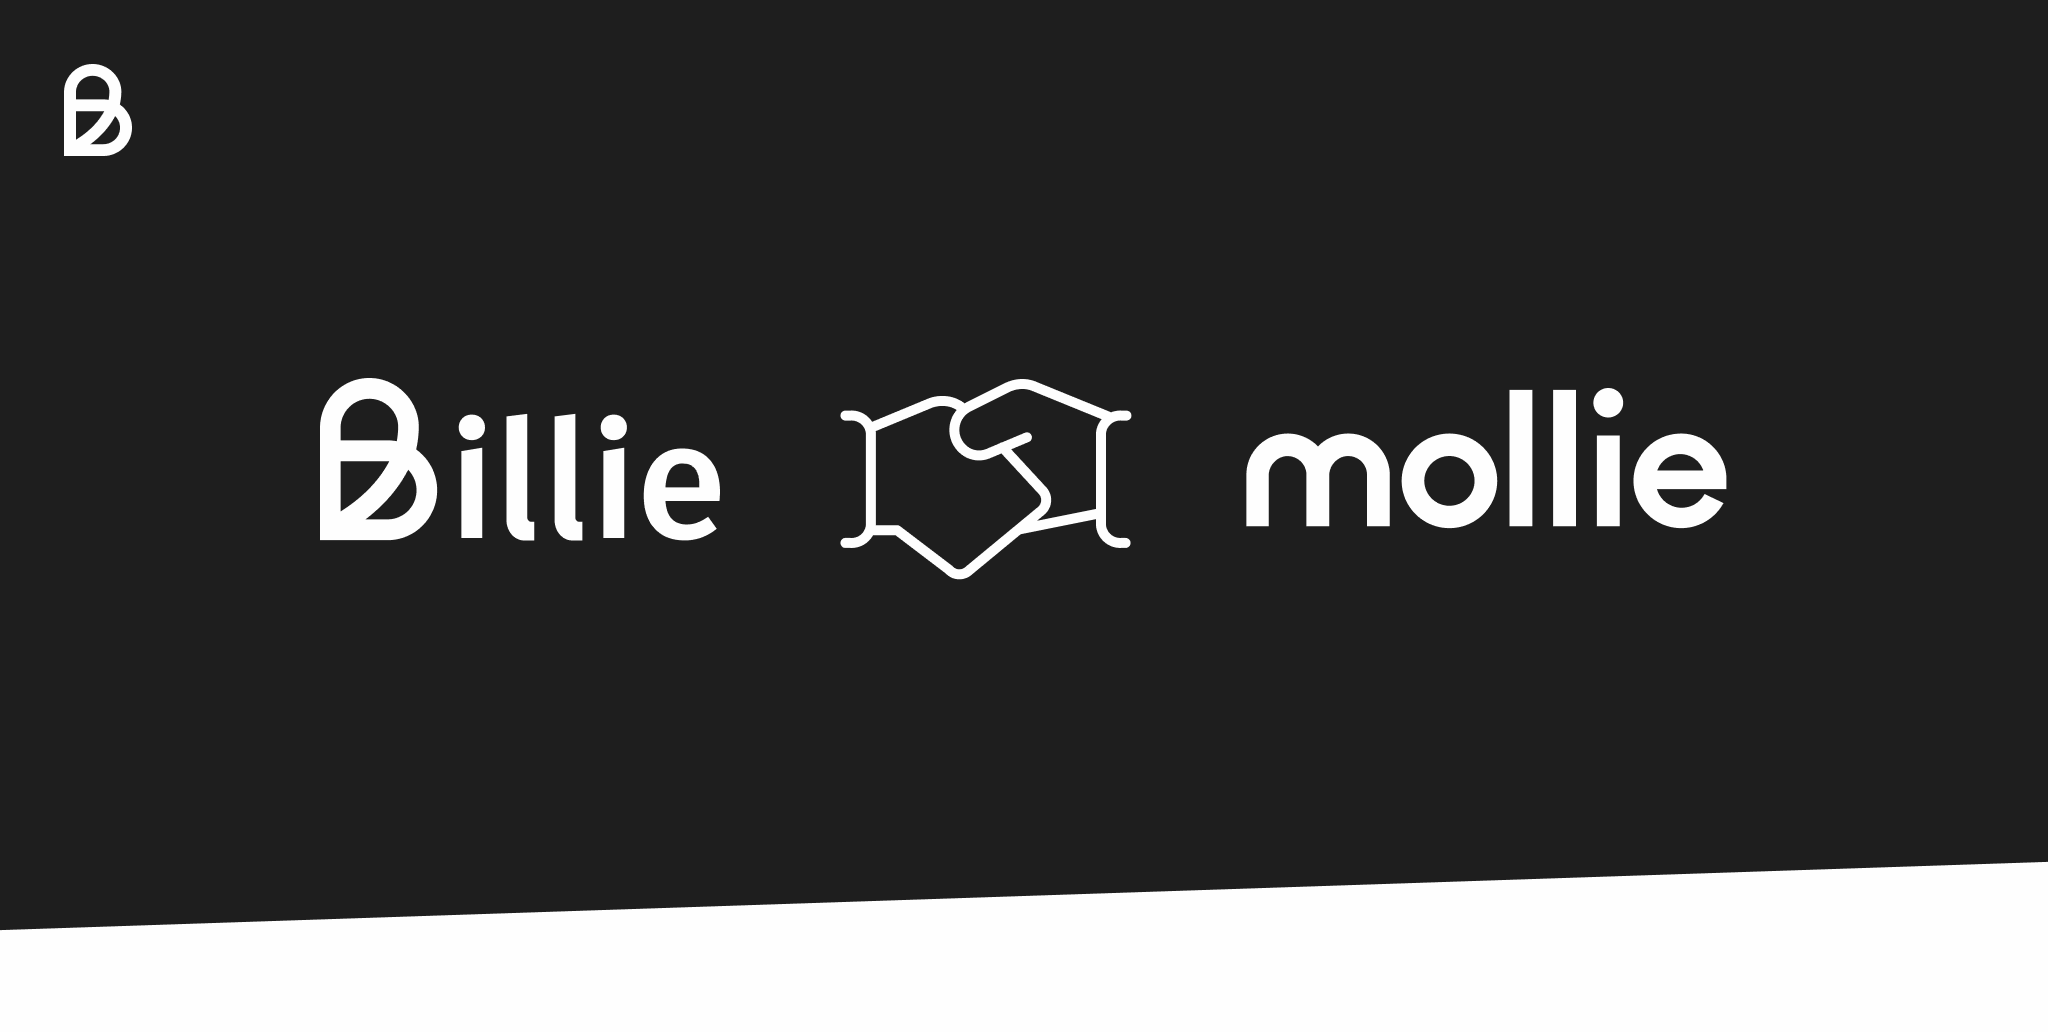 Billie-Mollie-Partnership